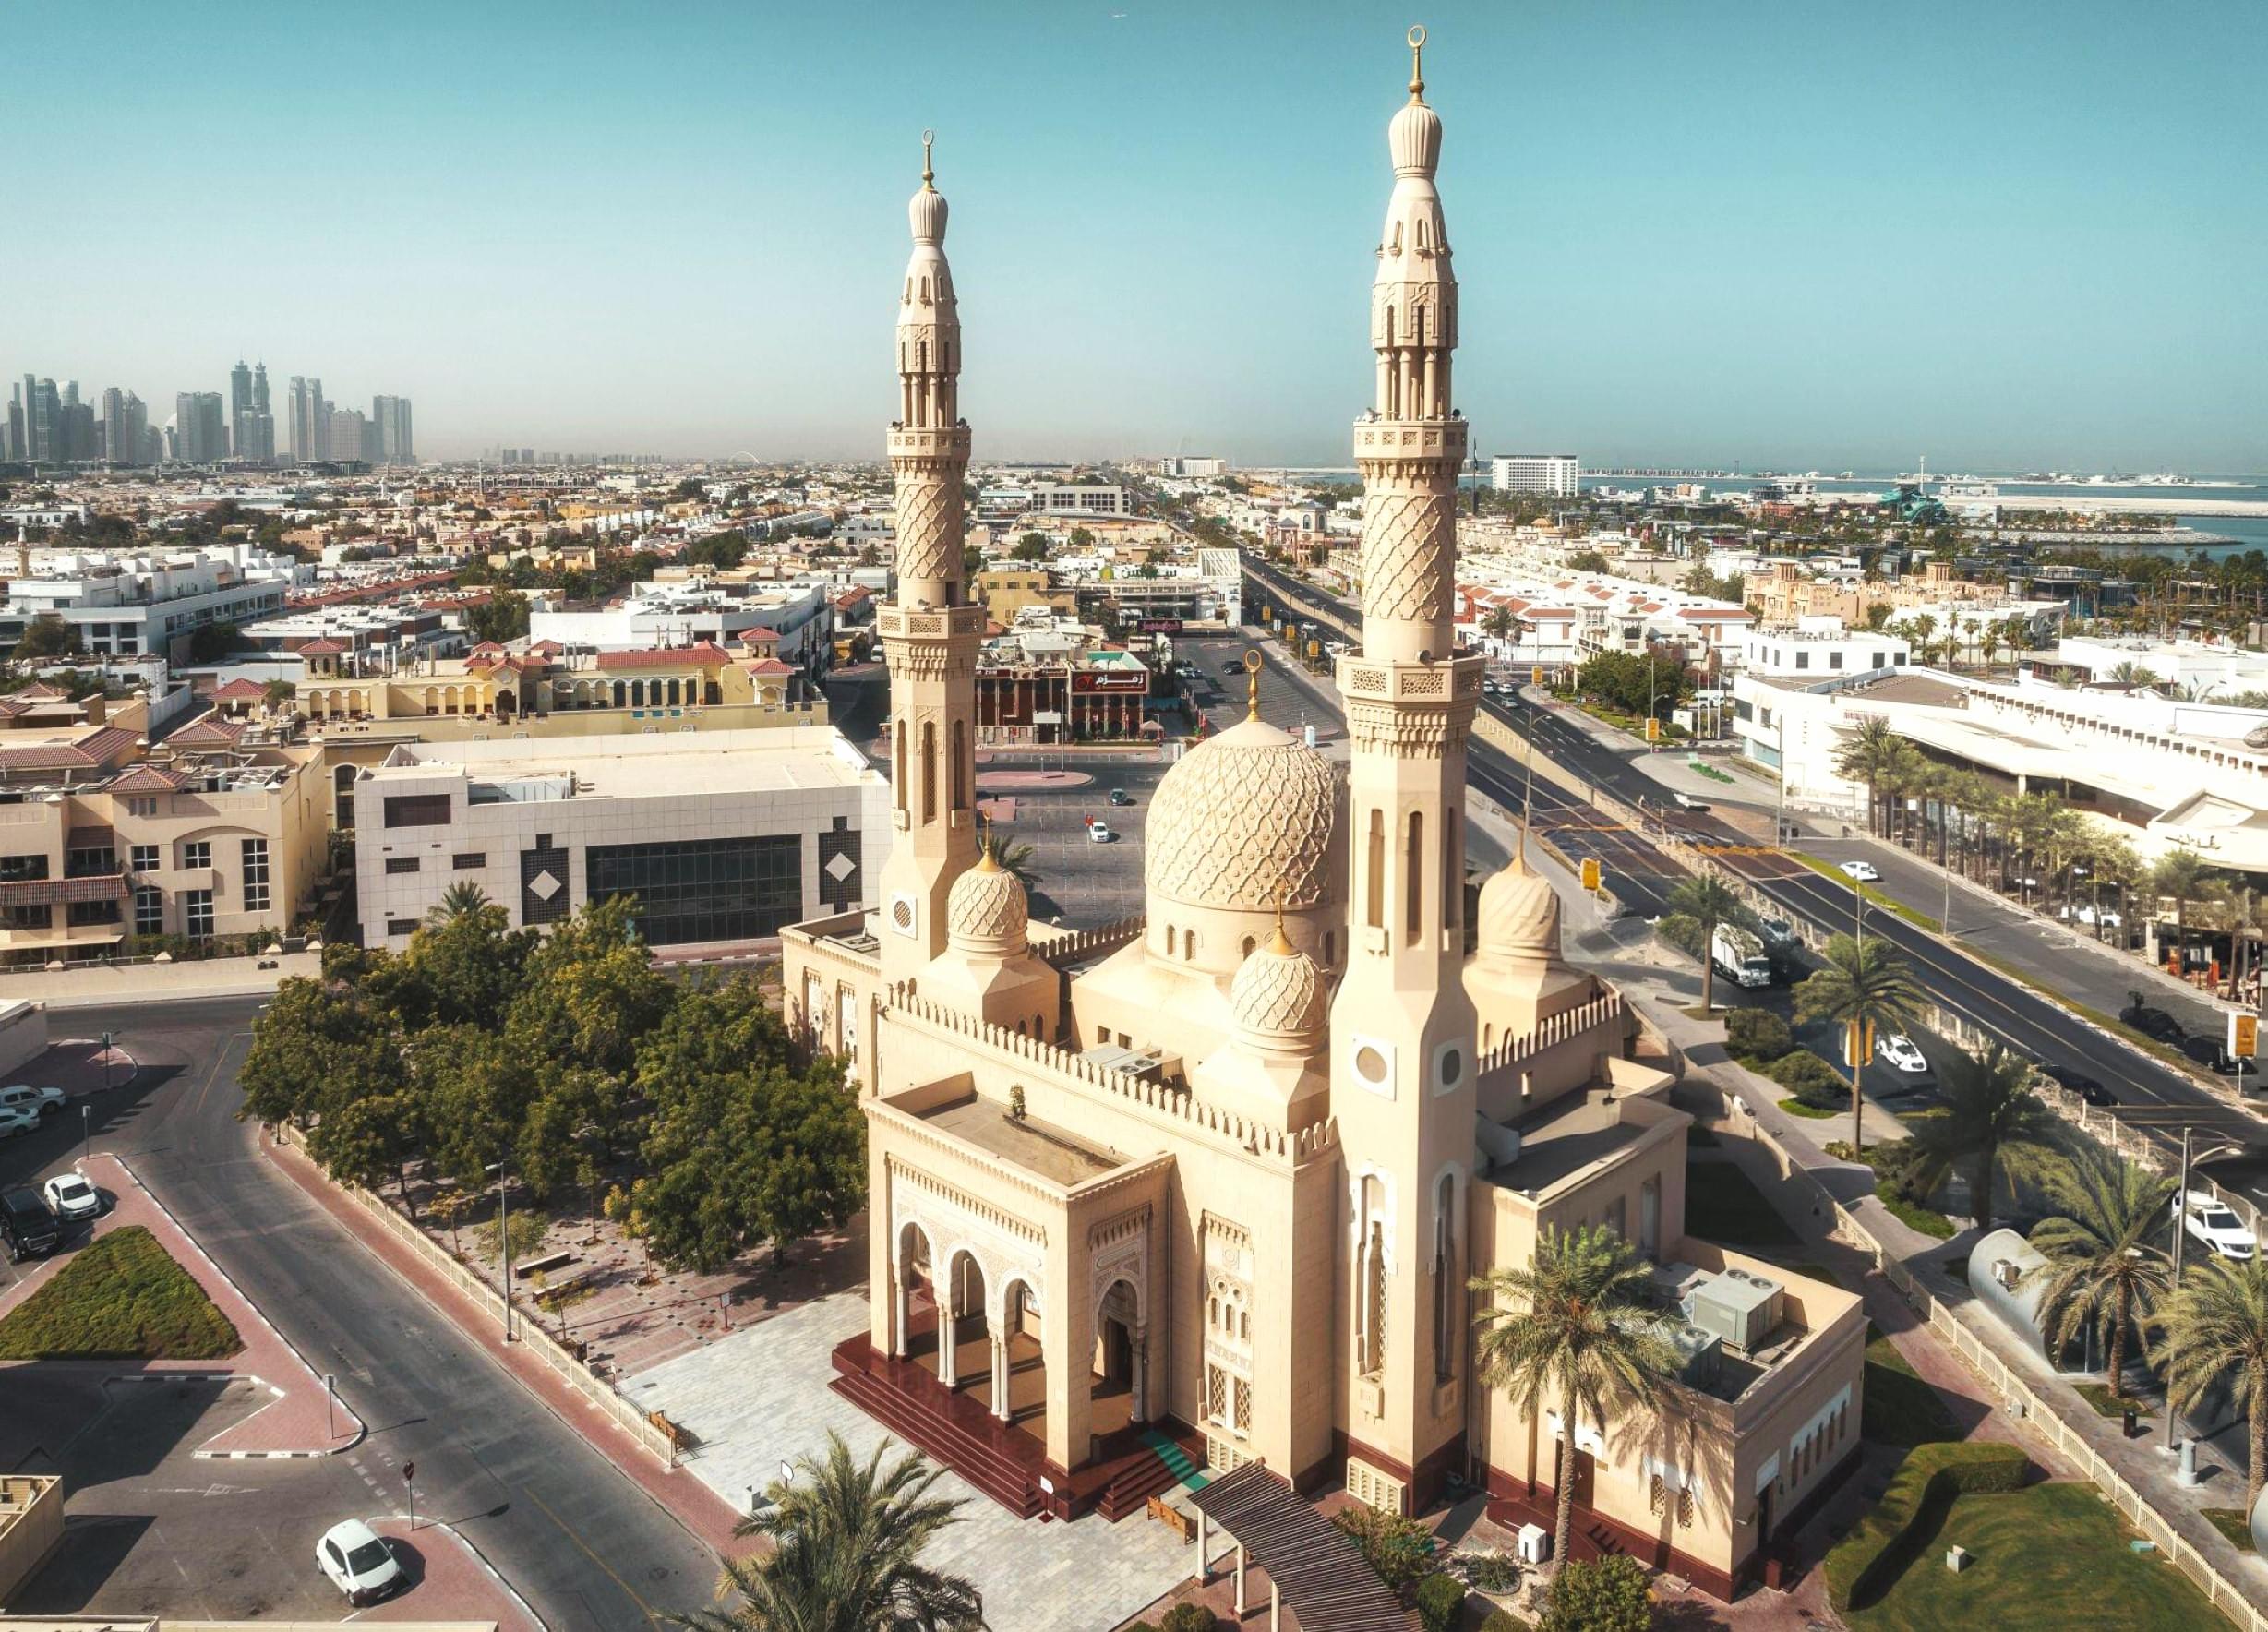 The beautiful Jumeriah Mosque in Dubai